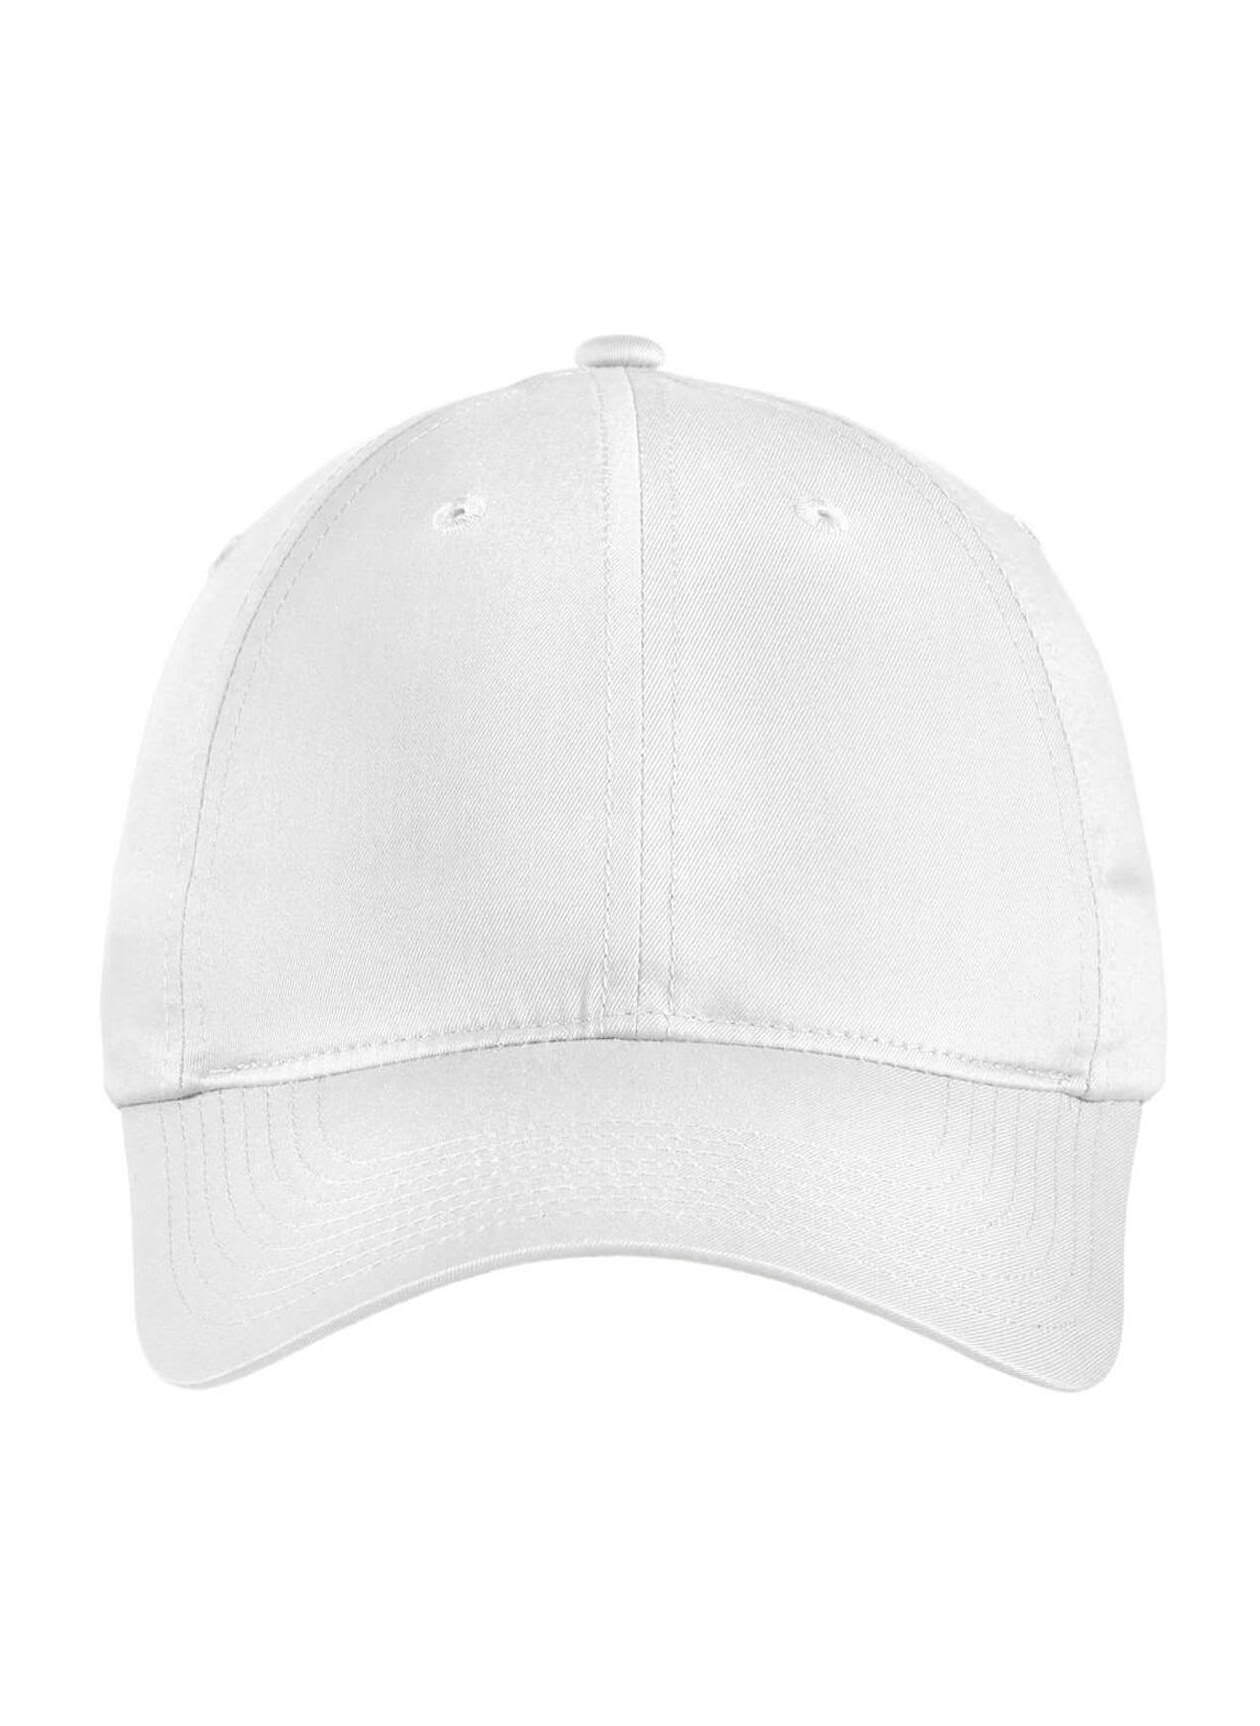 Nike True White Unstructured Twill Hat